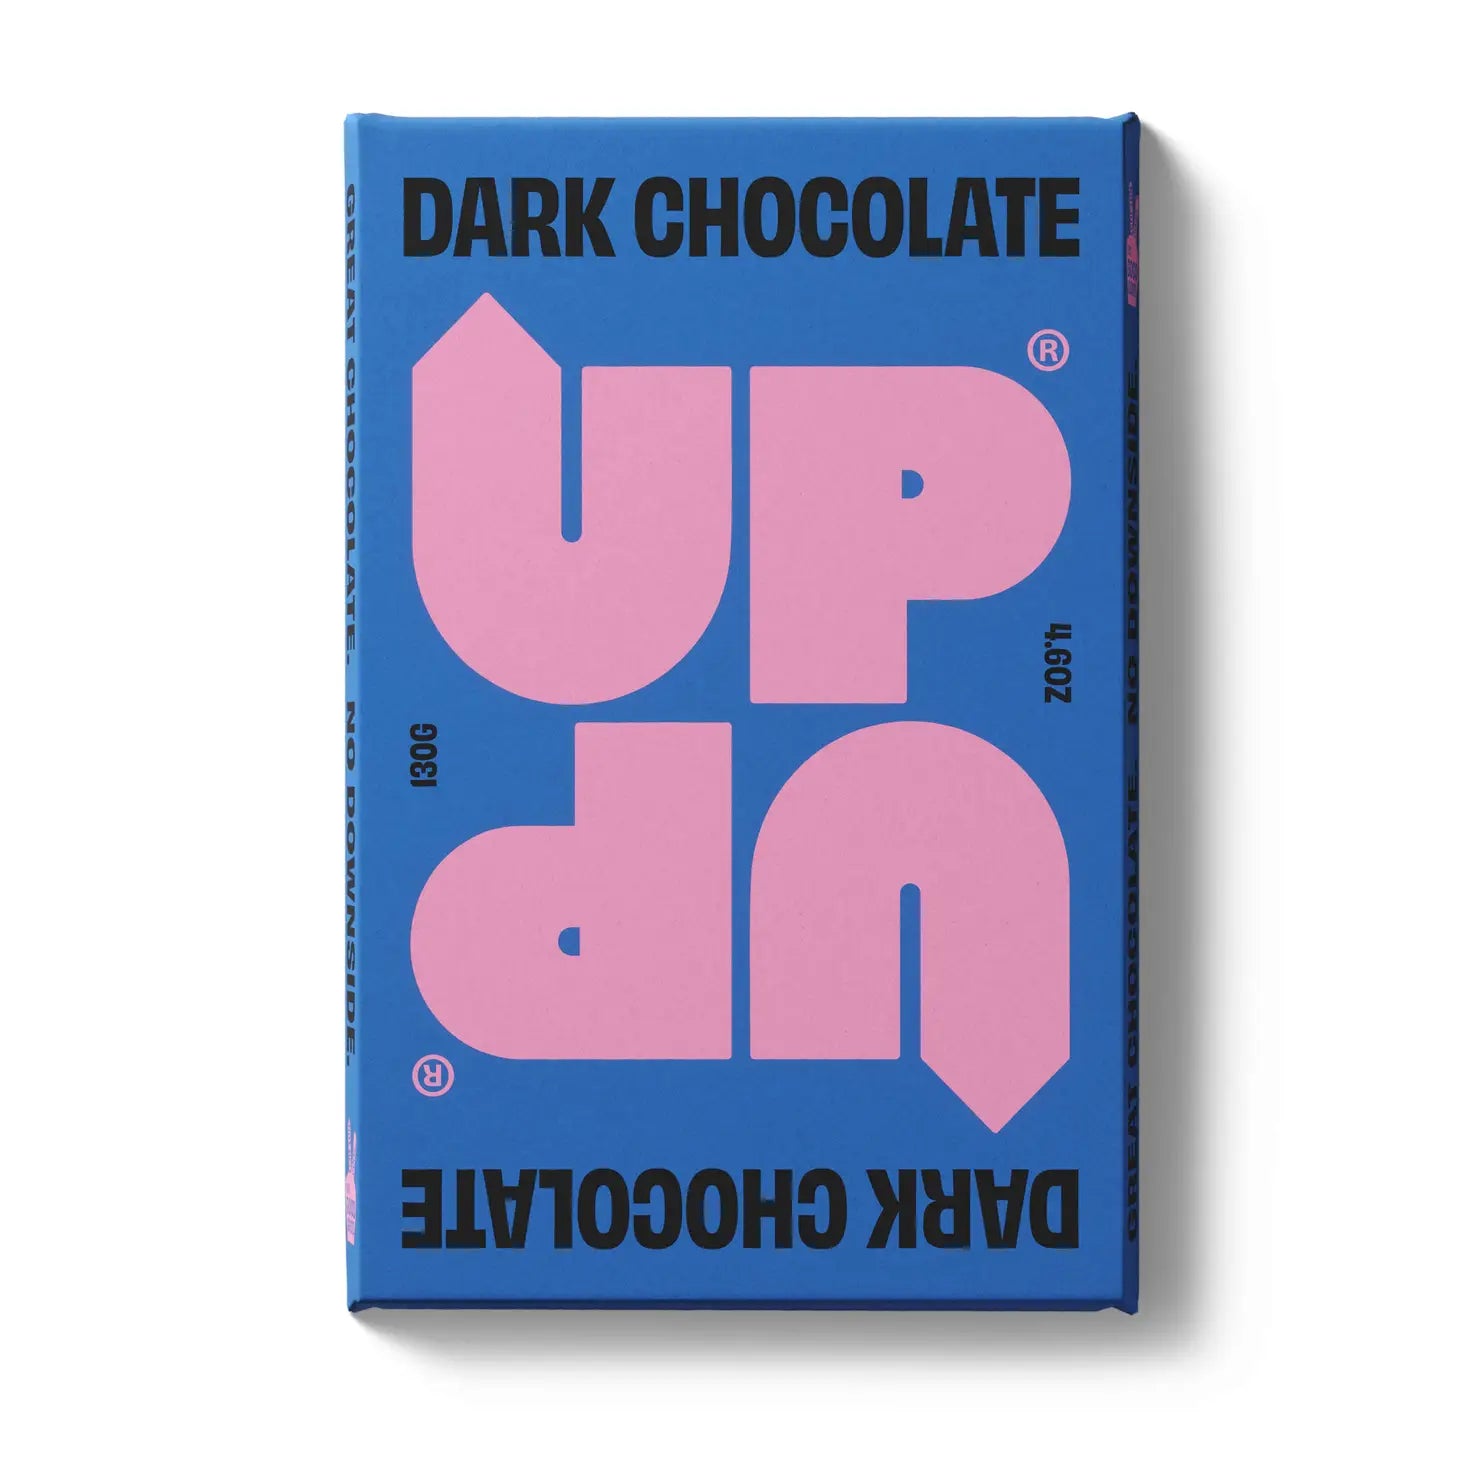 Dunkle Schokolade 130g / UP-UP Chocolate